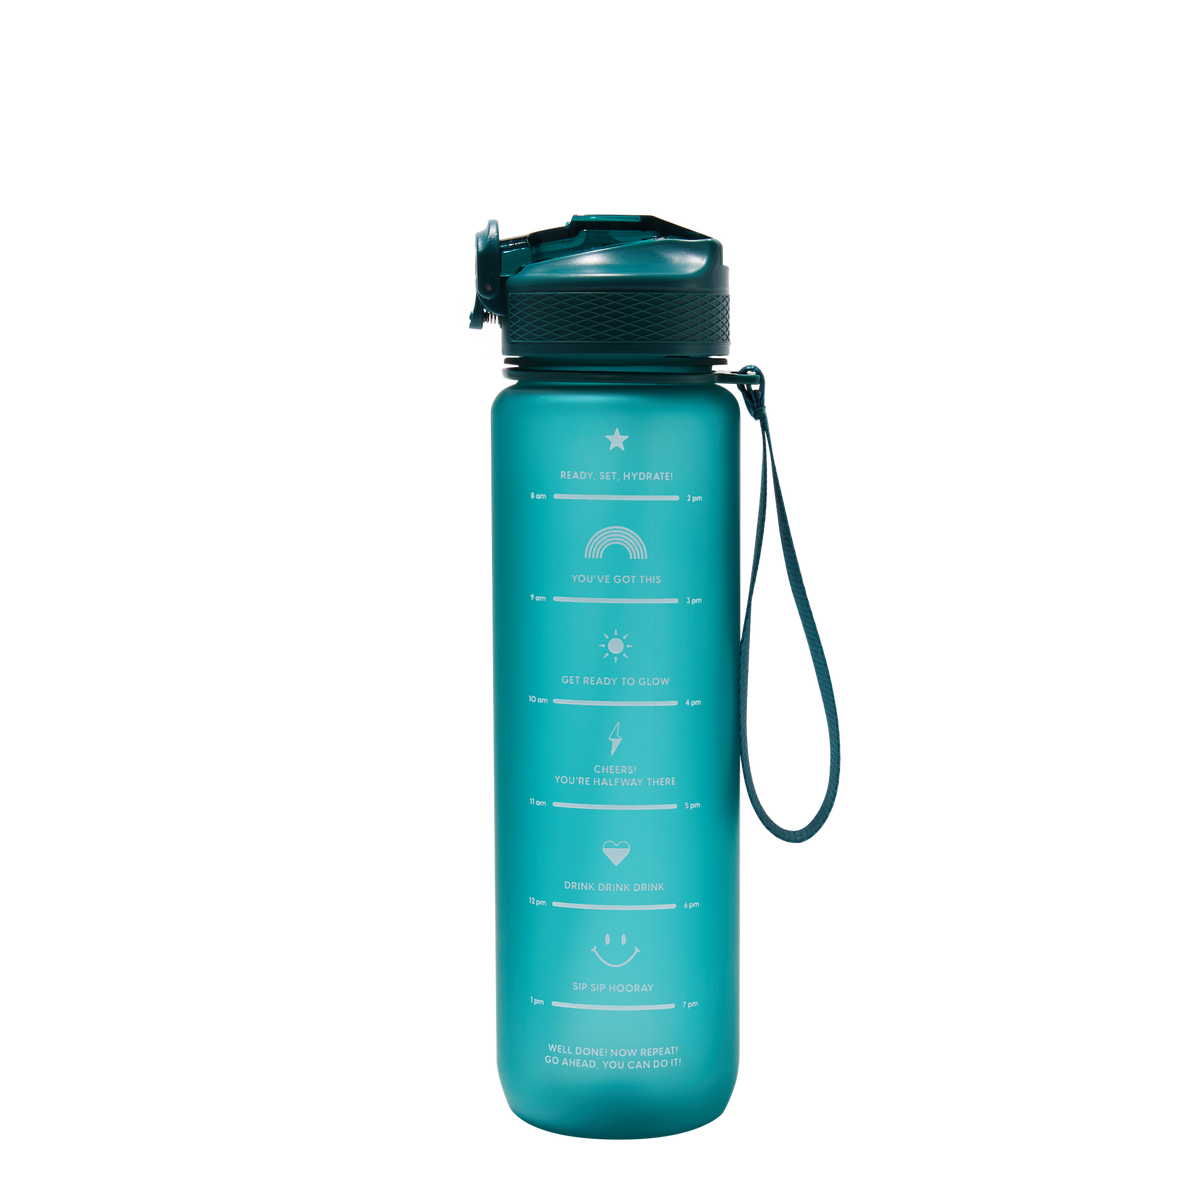 New Reebok Sports Hydration Water Bottle Athletic Drink Fitness